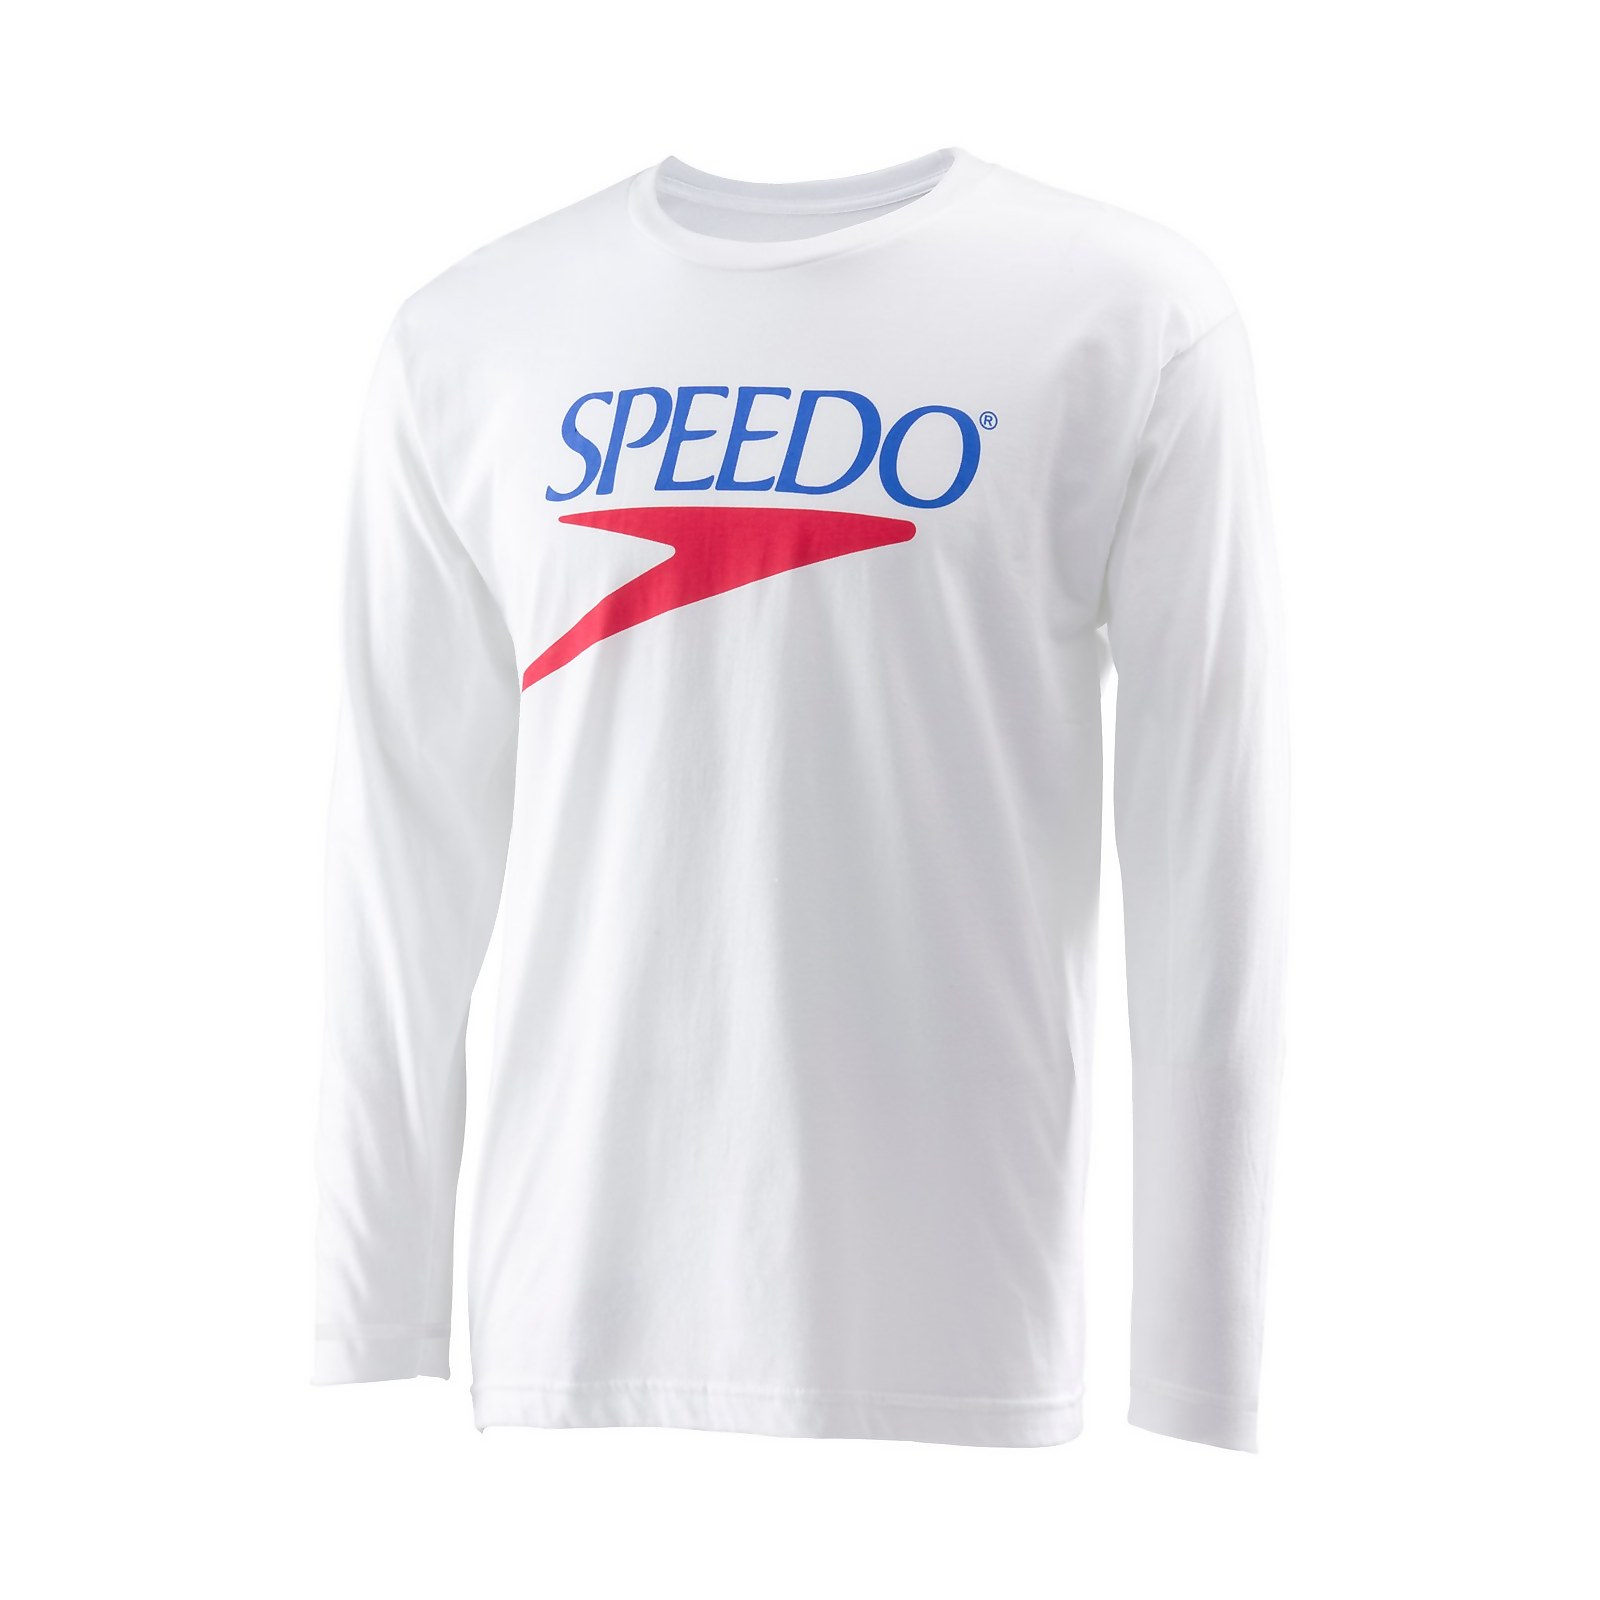 Speedo  Vintage Logo Long Sleeve Tee - M    : White